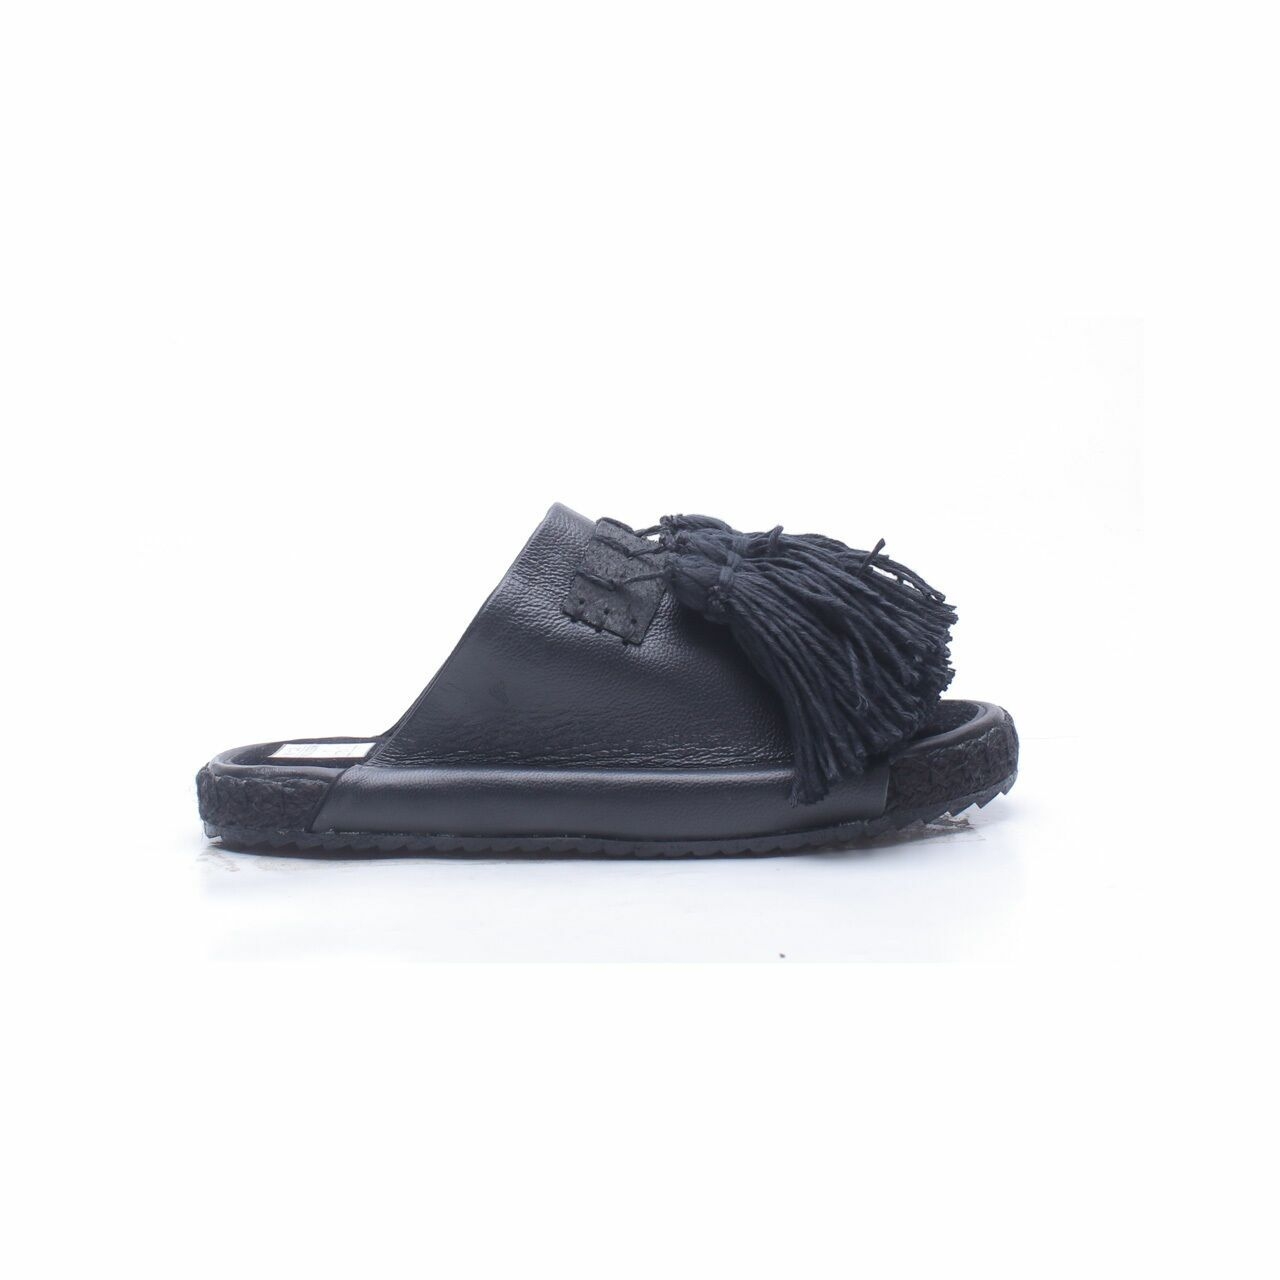 Tigah x Douche HQ Black Mules Sandals